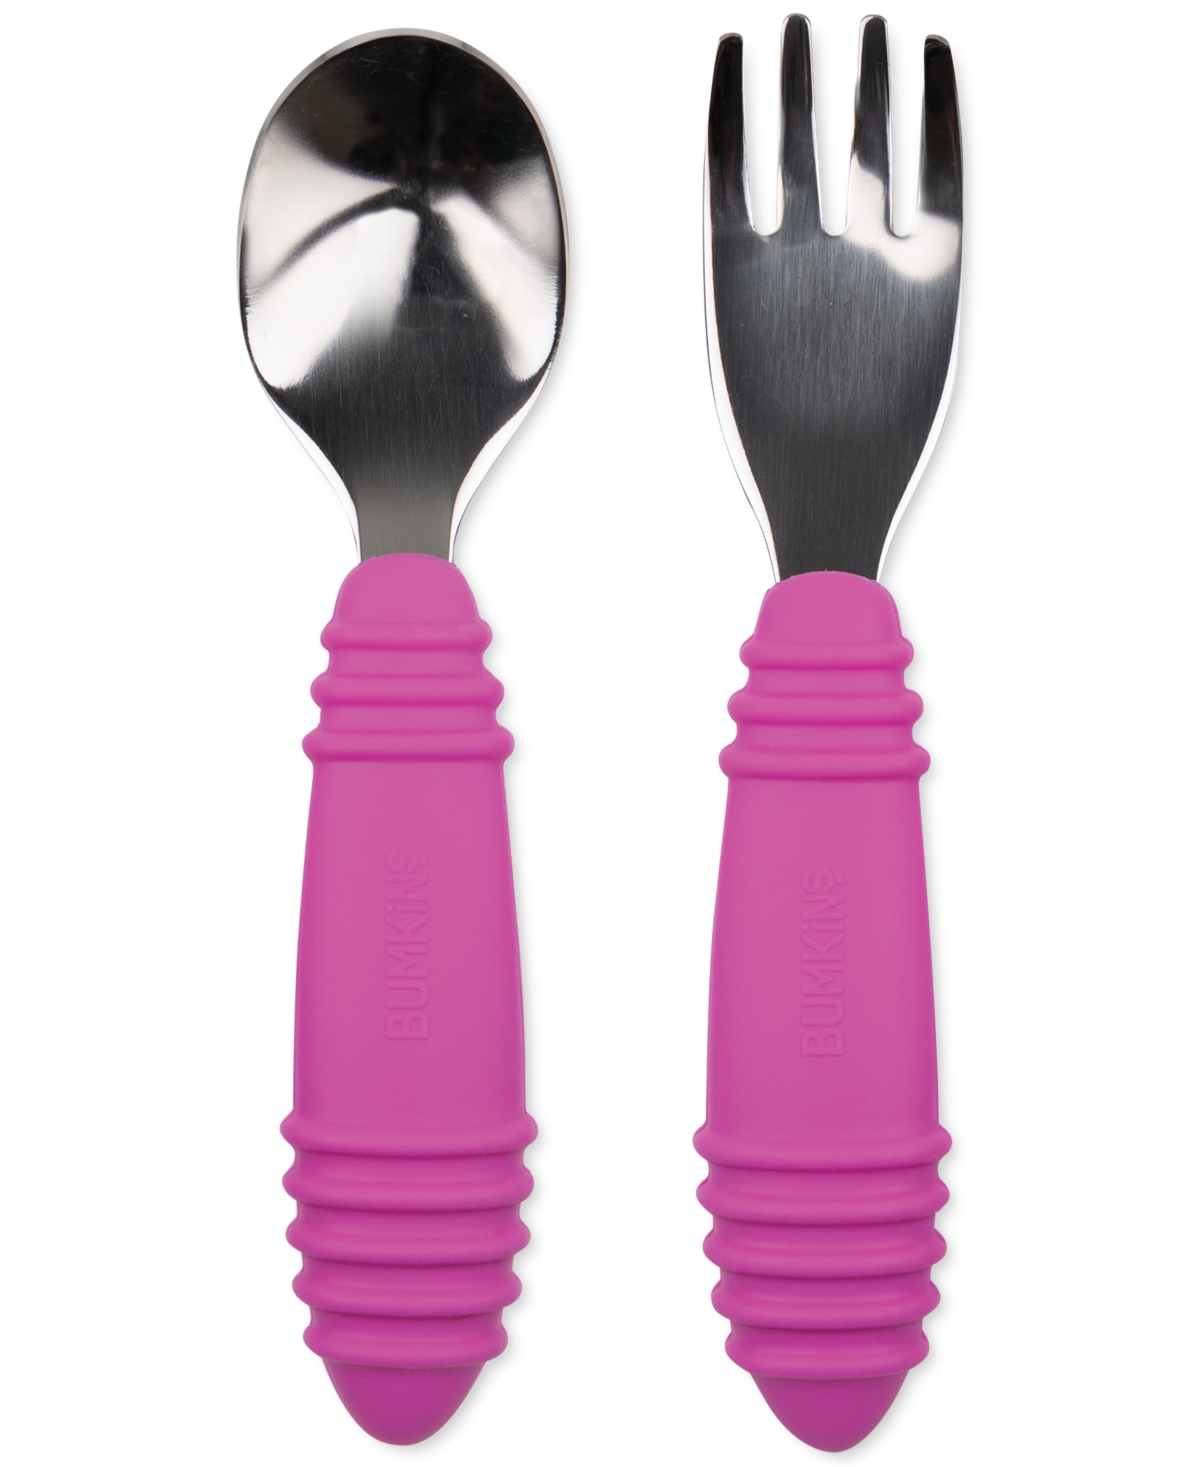 Bumkins 2-pc. Toddler Spoon & Fork Set In Fuschia